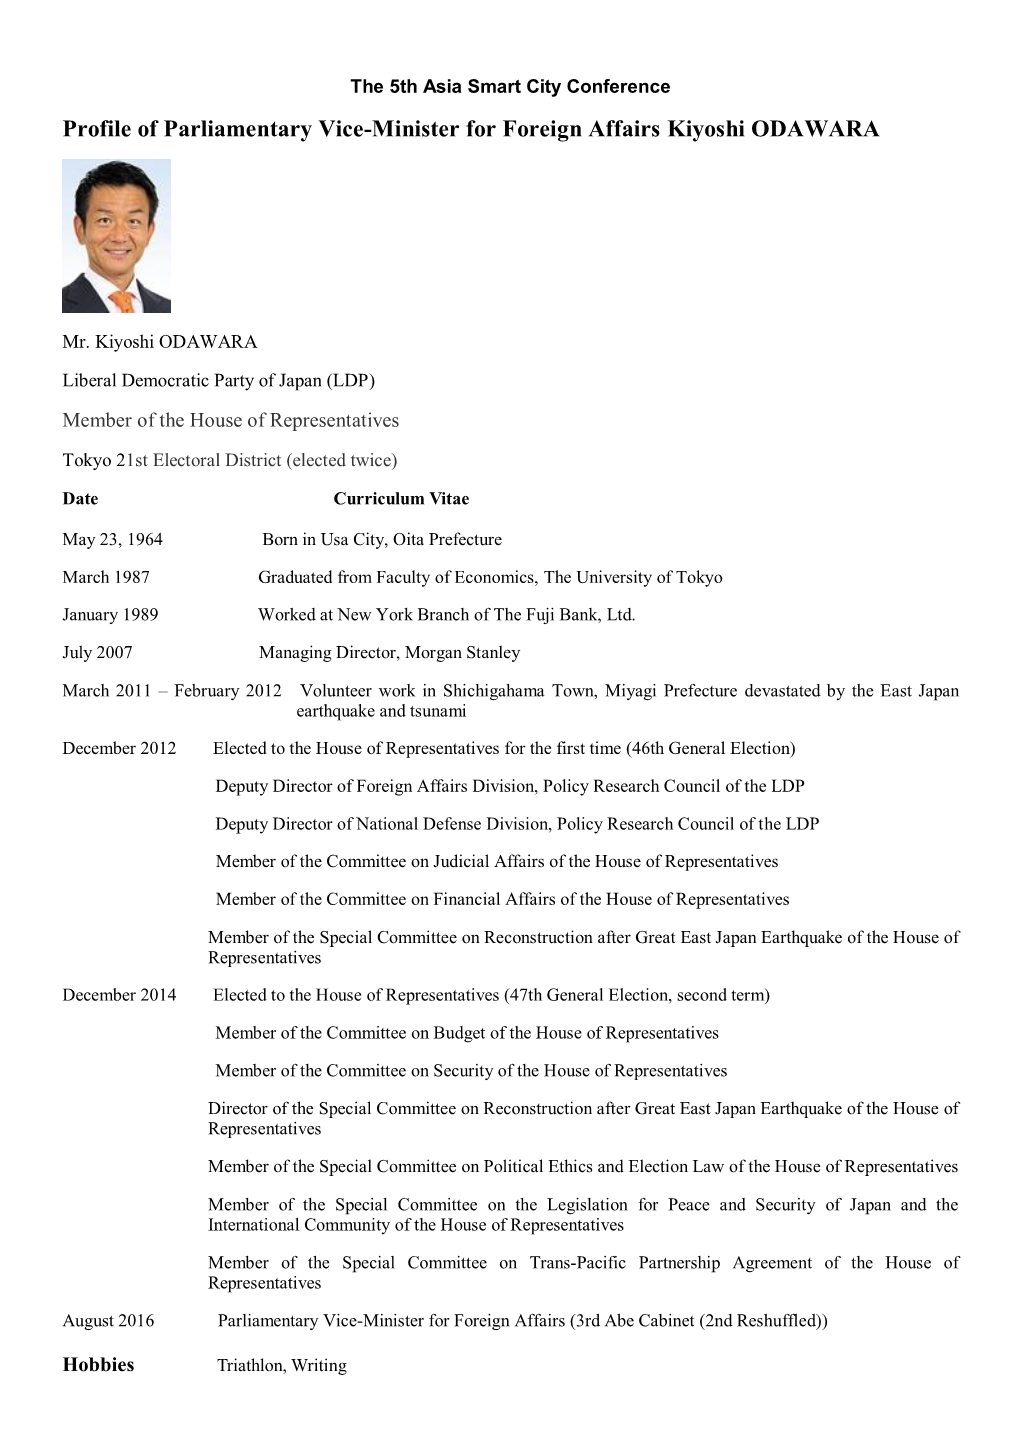 Profile of Parliamentary Vice-Minister for Foreign Affairs Kiyoshi ODAWARA